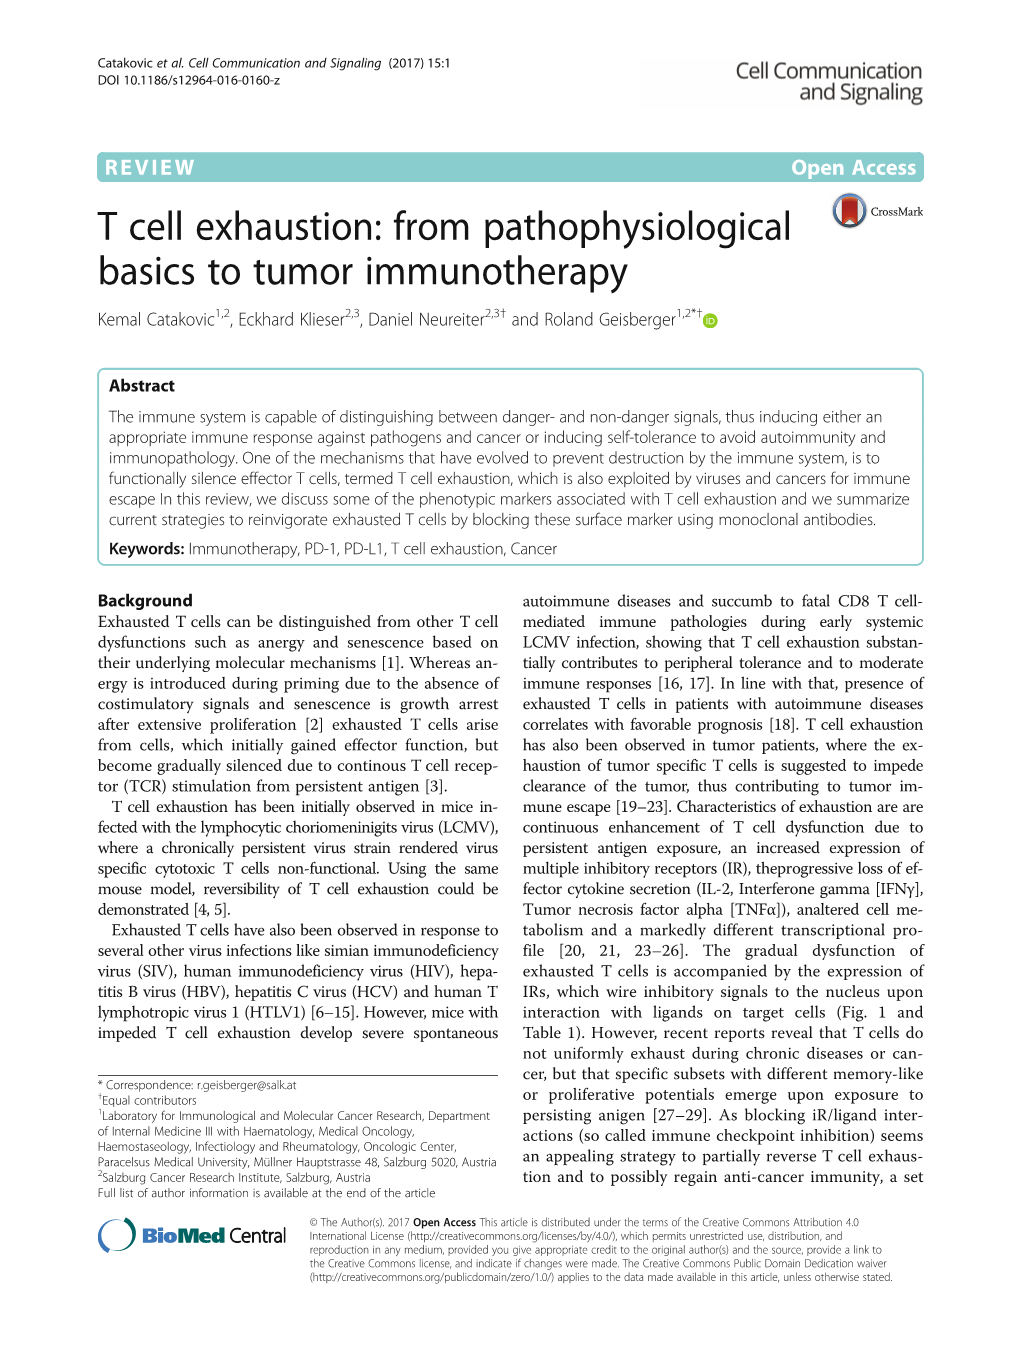 T Cell Exhaustion: from Pathophysiological Basics to Tumor Immunotherapy Kemal Catakovic1,2, Eckhard Klieser2,3, Daniel Neureiter2,3† and Roland Geisberger1,2*†